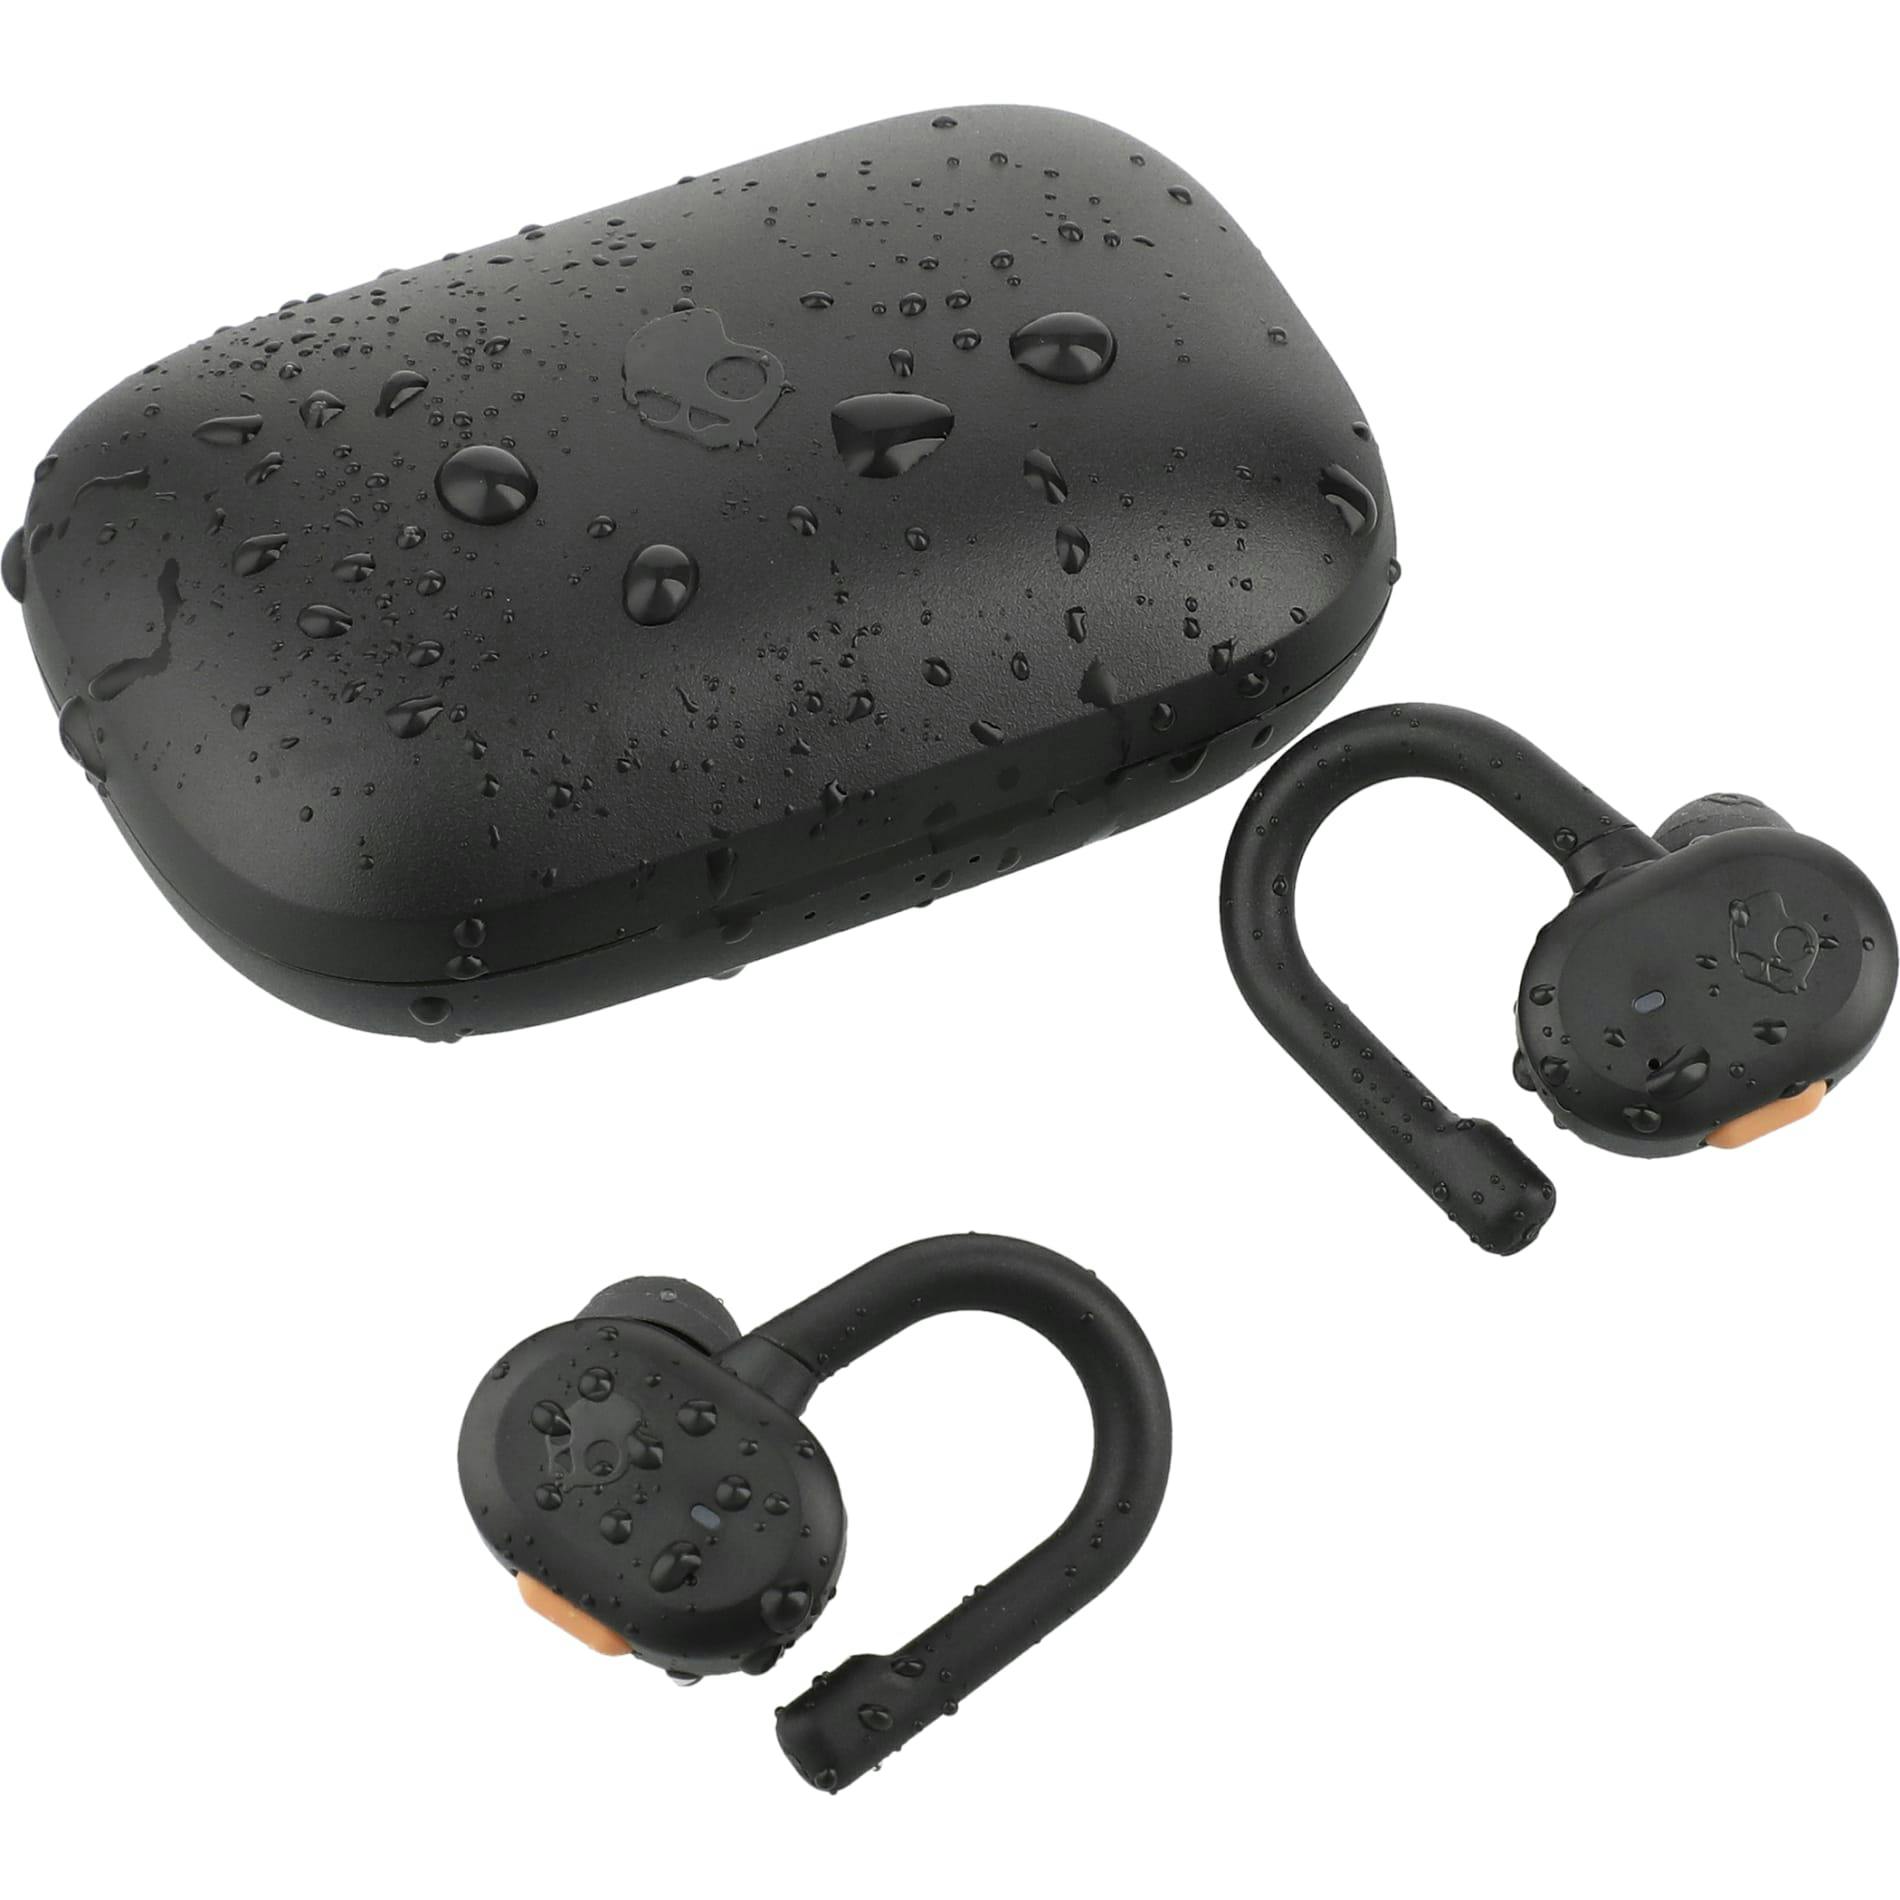 Skullcandy Push Active True Wireless Sport Earbuds - additional Image 1